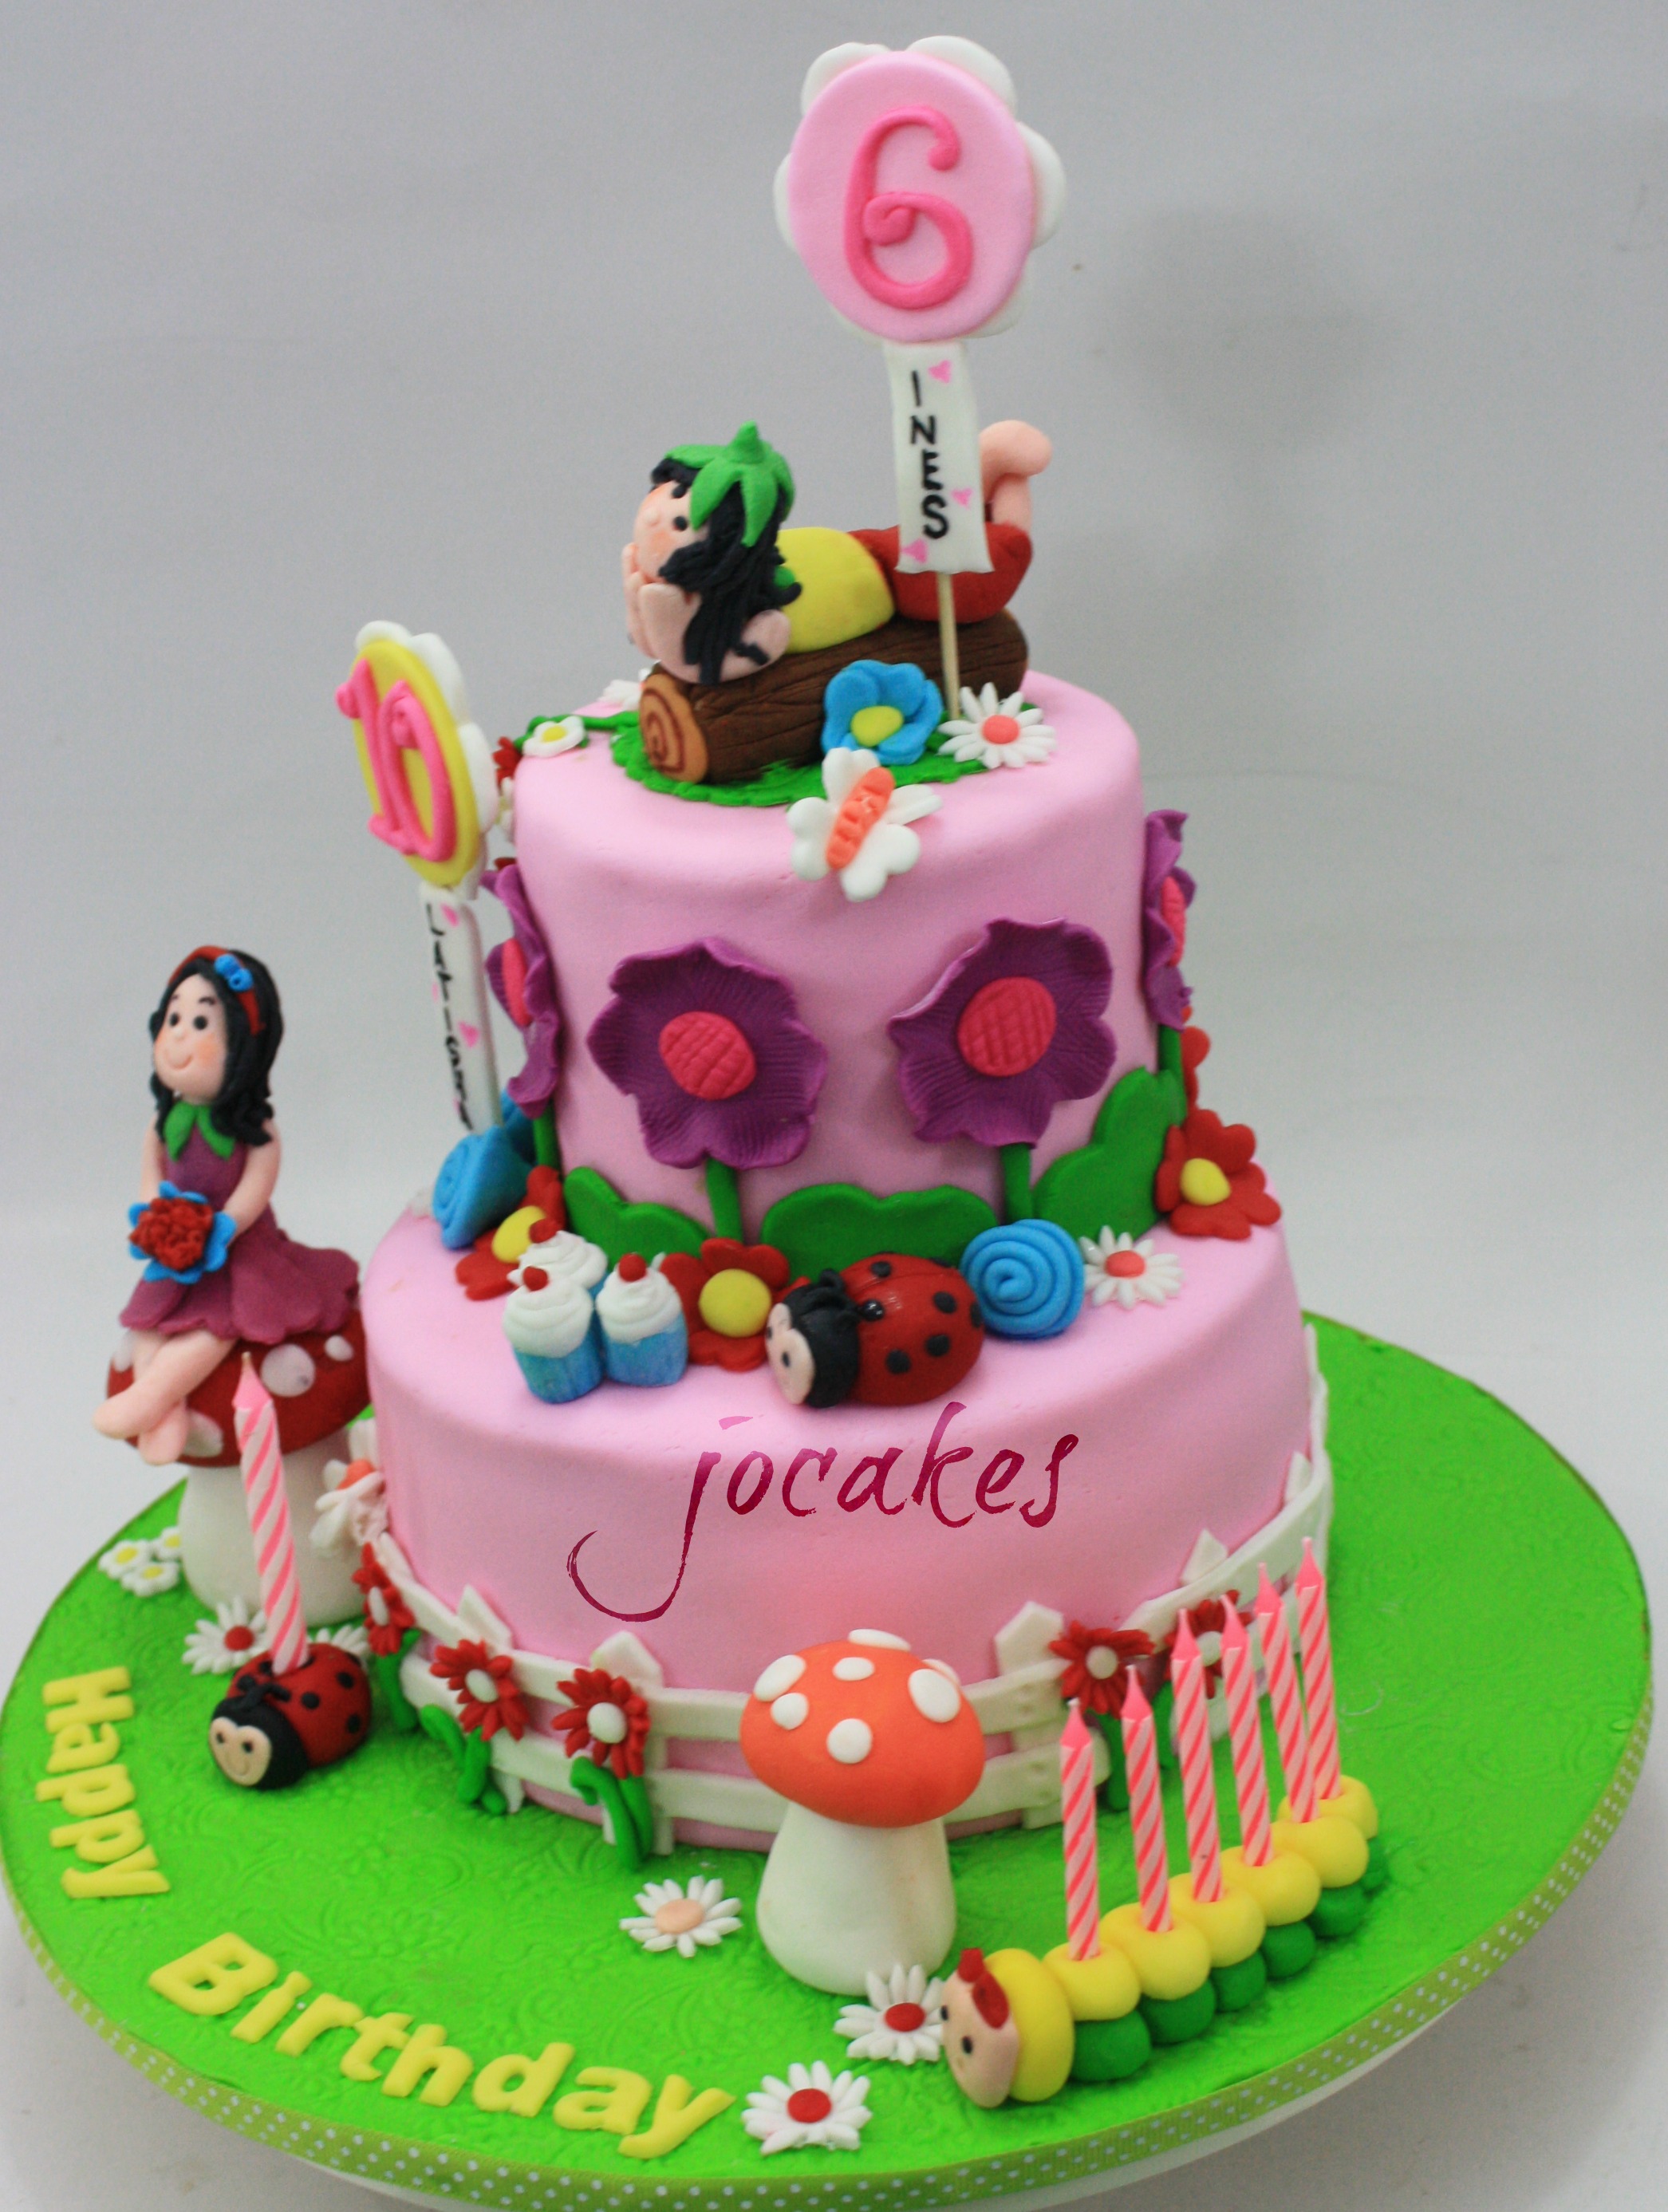 6 Year Old Girl Birthday Cake - A Birthday Cake